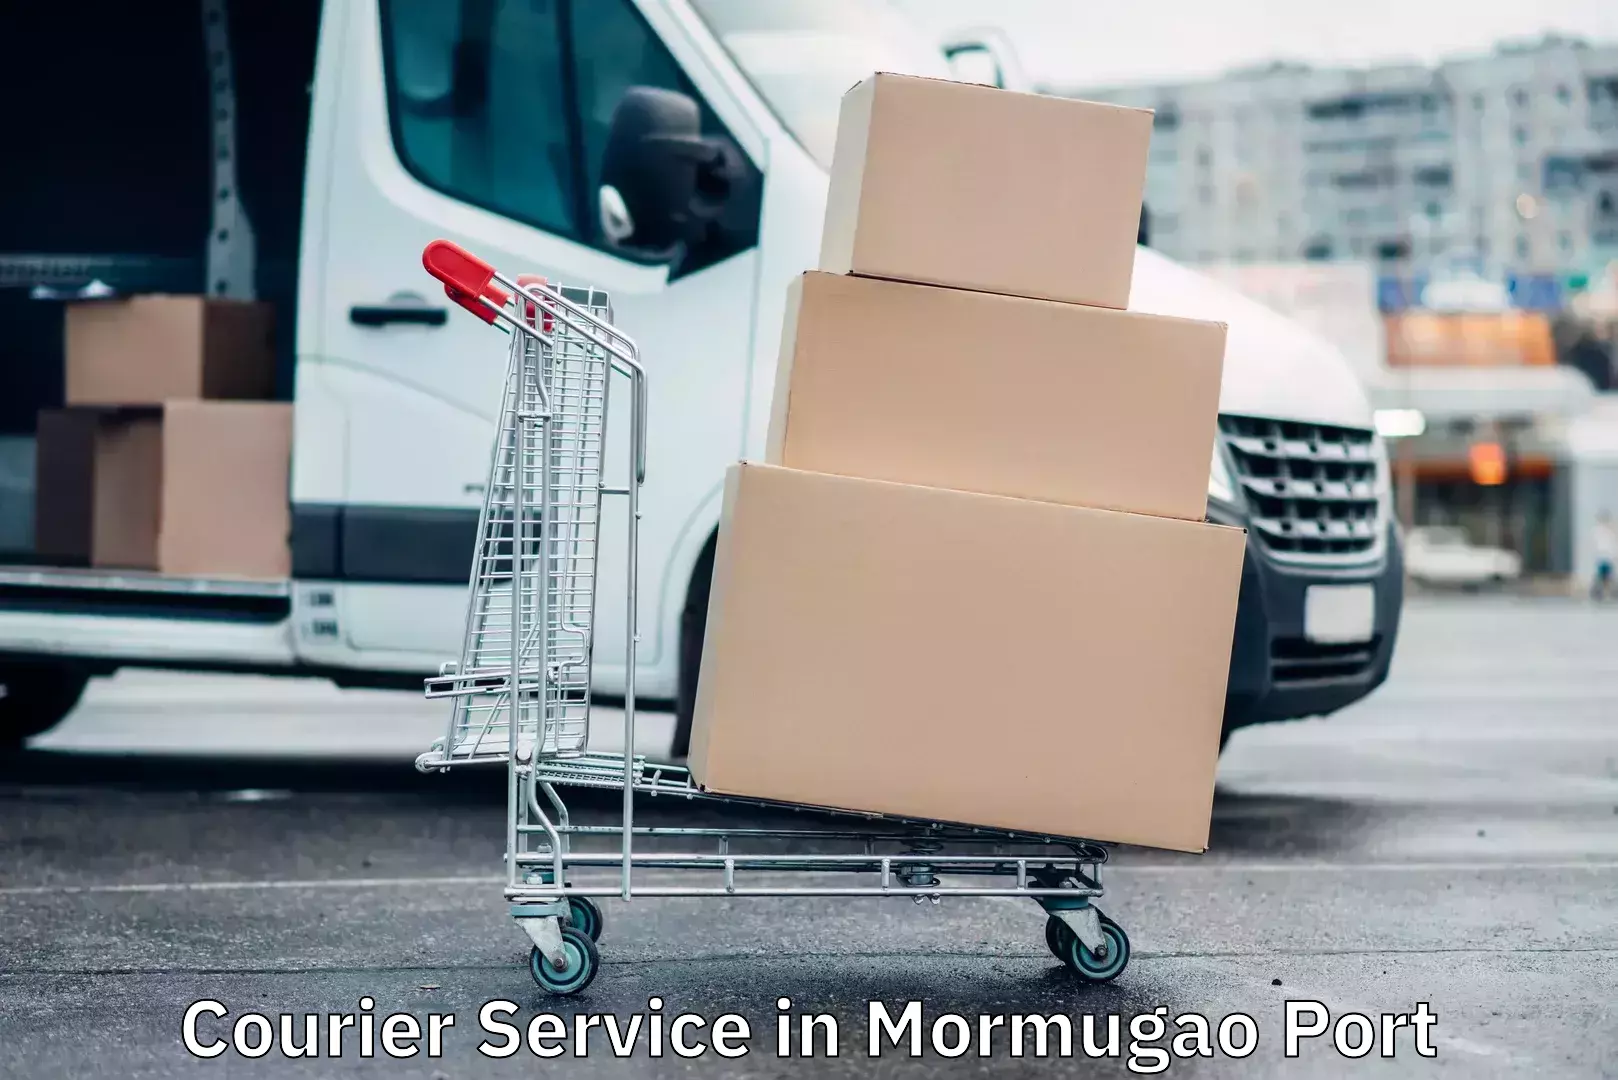 Delivery service partnership in Mormugao Port